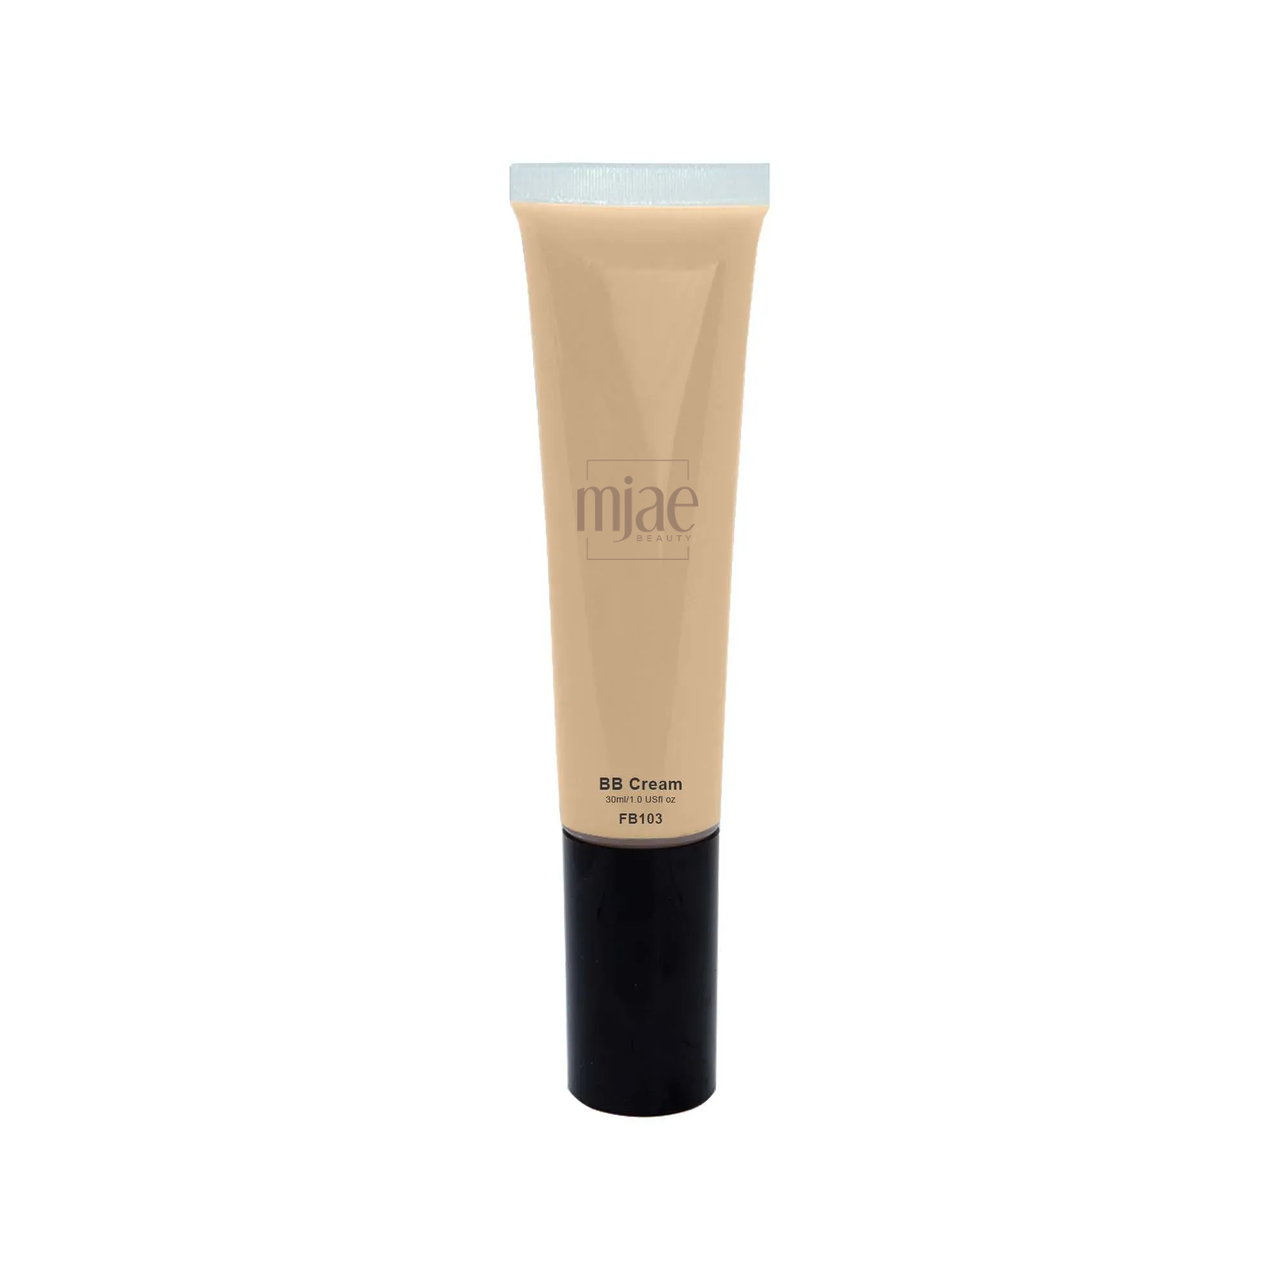 Mjae BB Cream with SPF - Terra Cotta - Clean Beauty